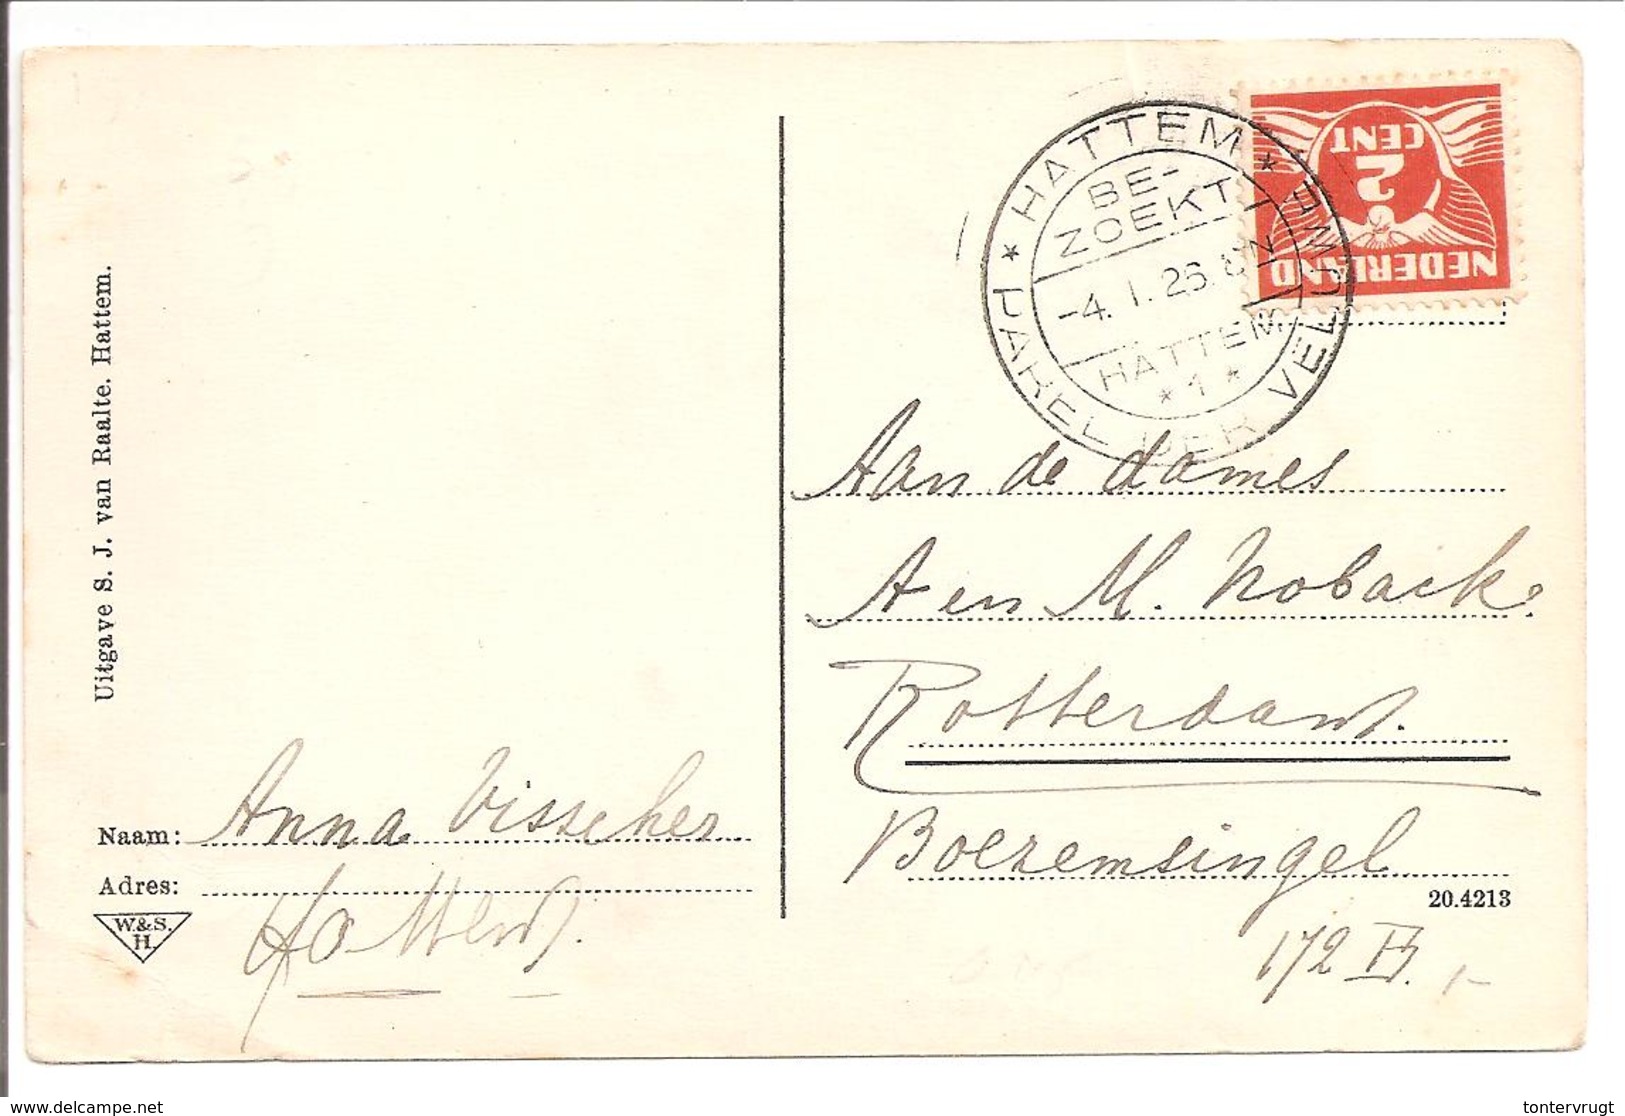 Reclame Handstempel. Hattem1926. Ansicht Oude Stadsmuur - Postal History